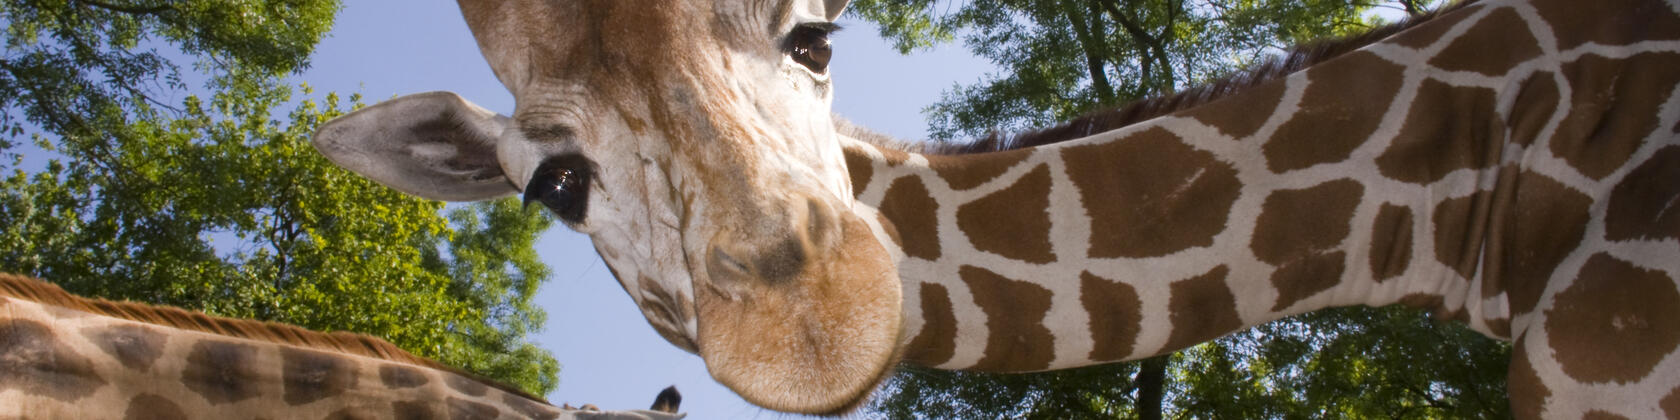 giraf kijkt in de camera